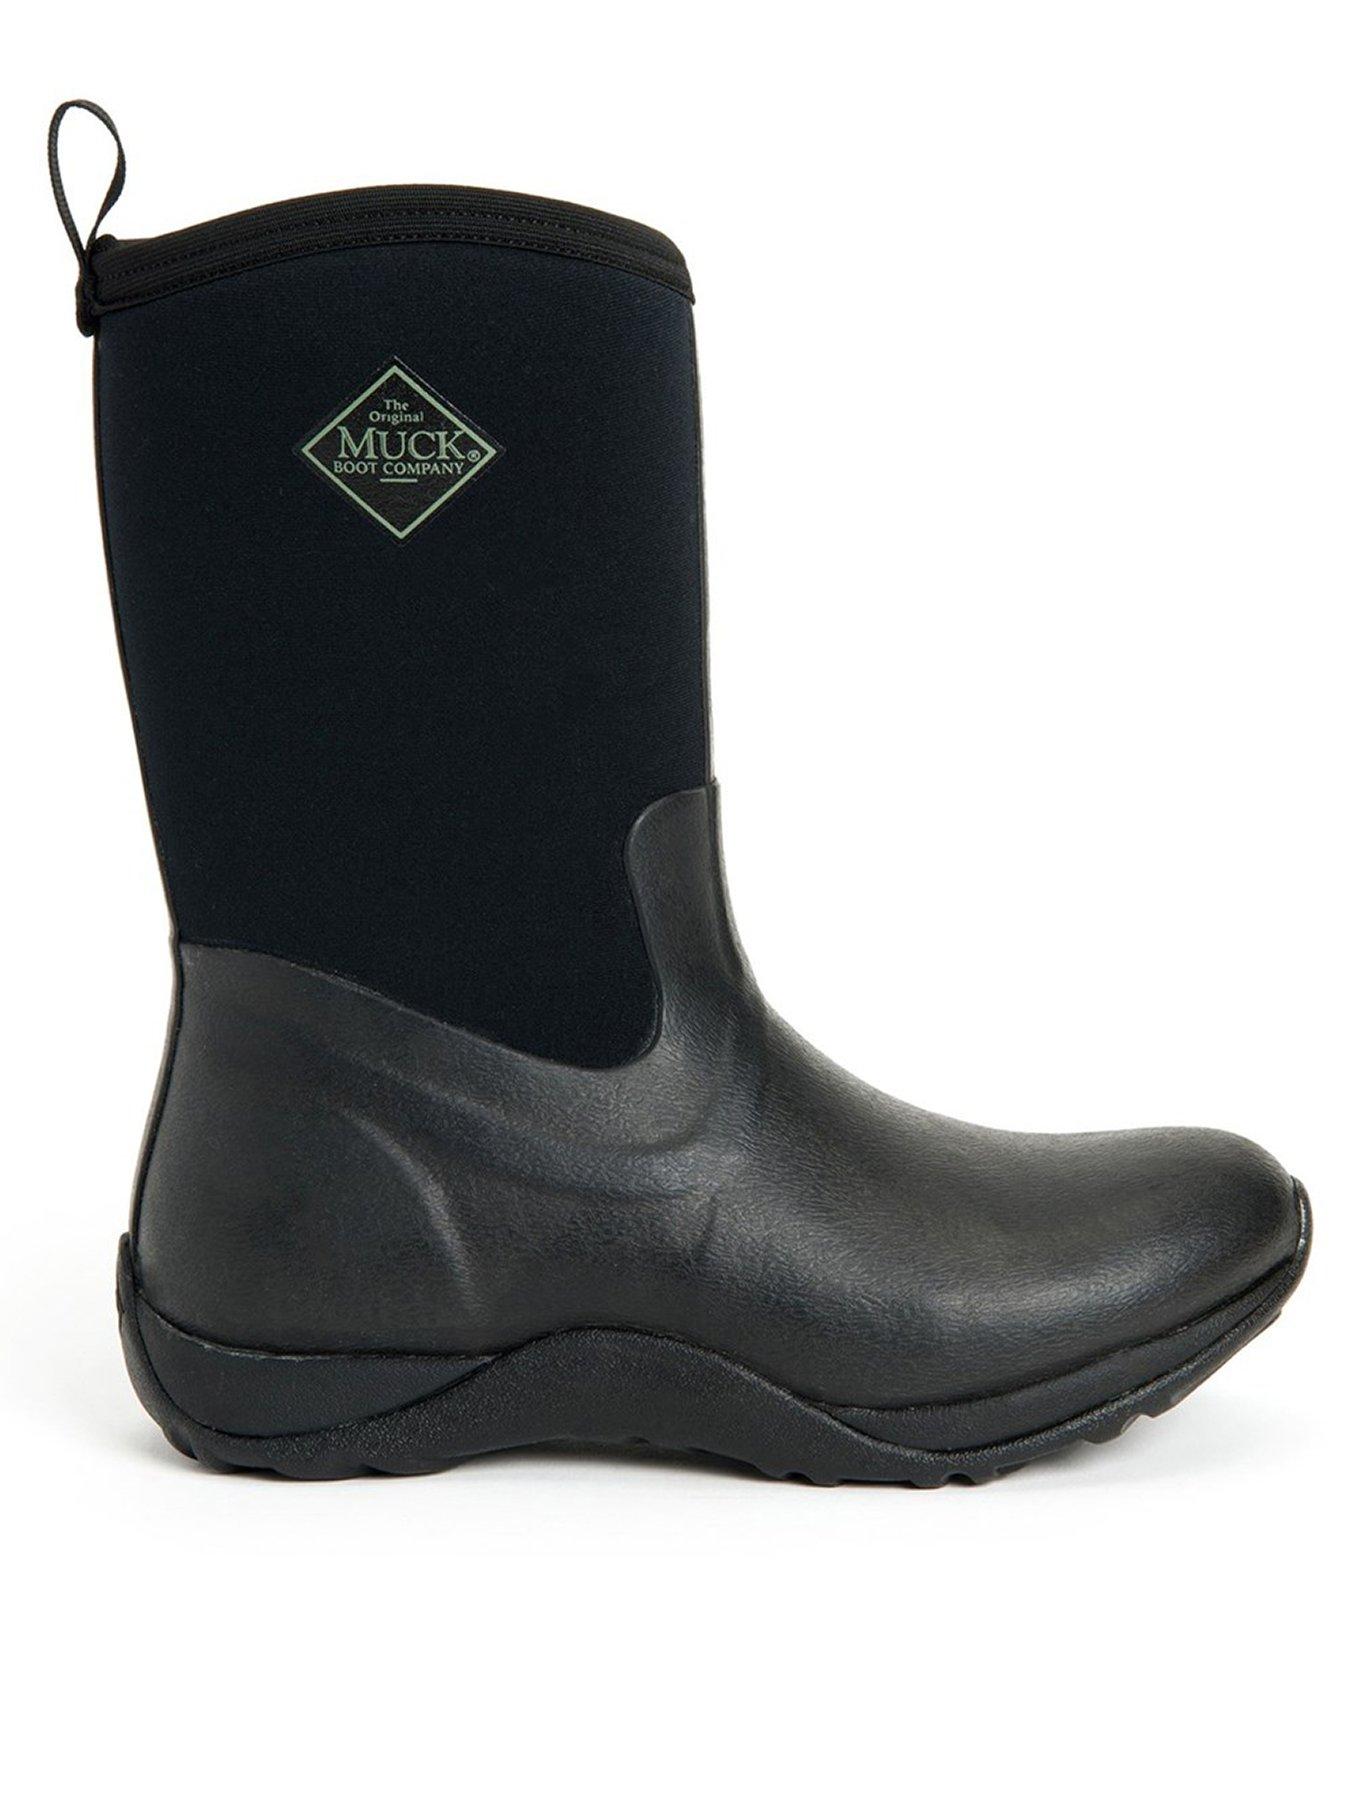 Muck Boots Ladies Arctic Weekend - Black, Black, Size 3, Women